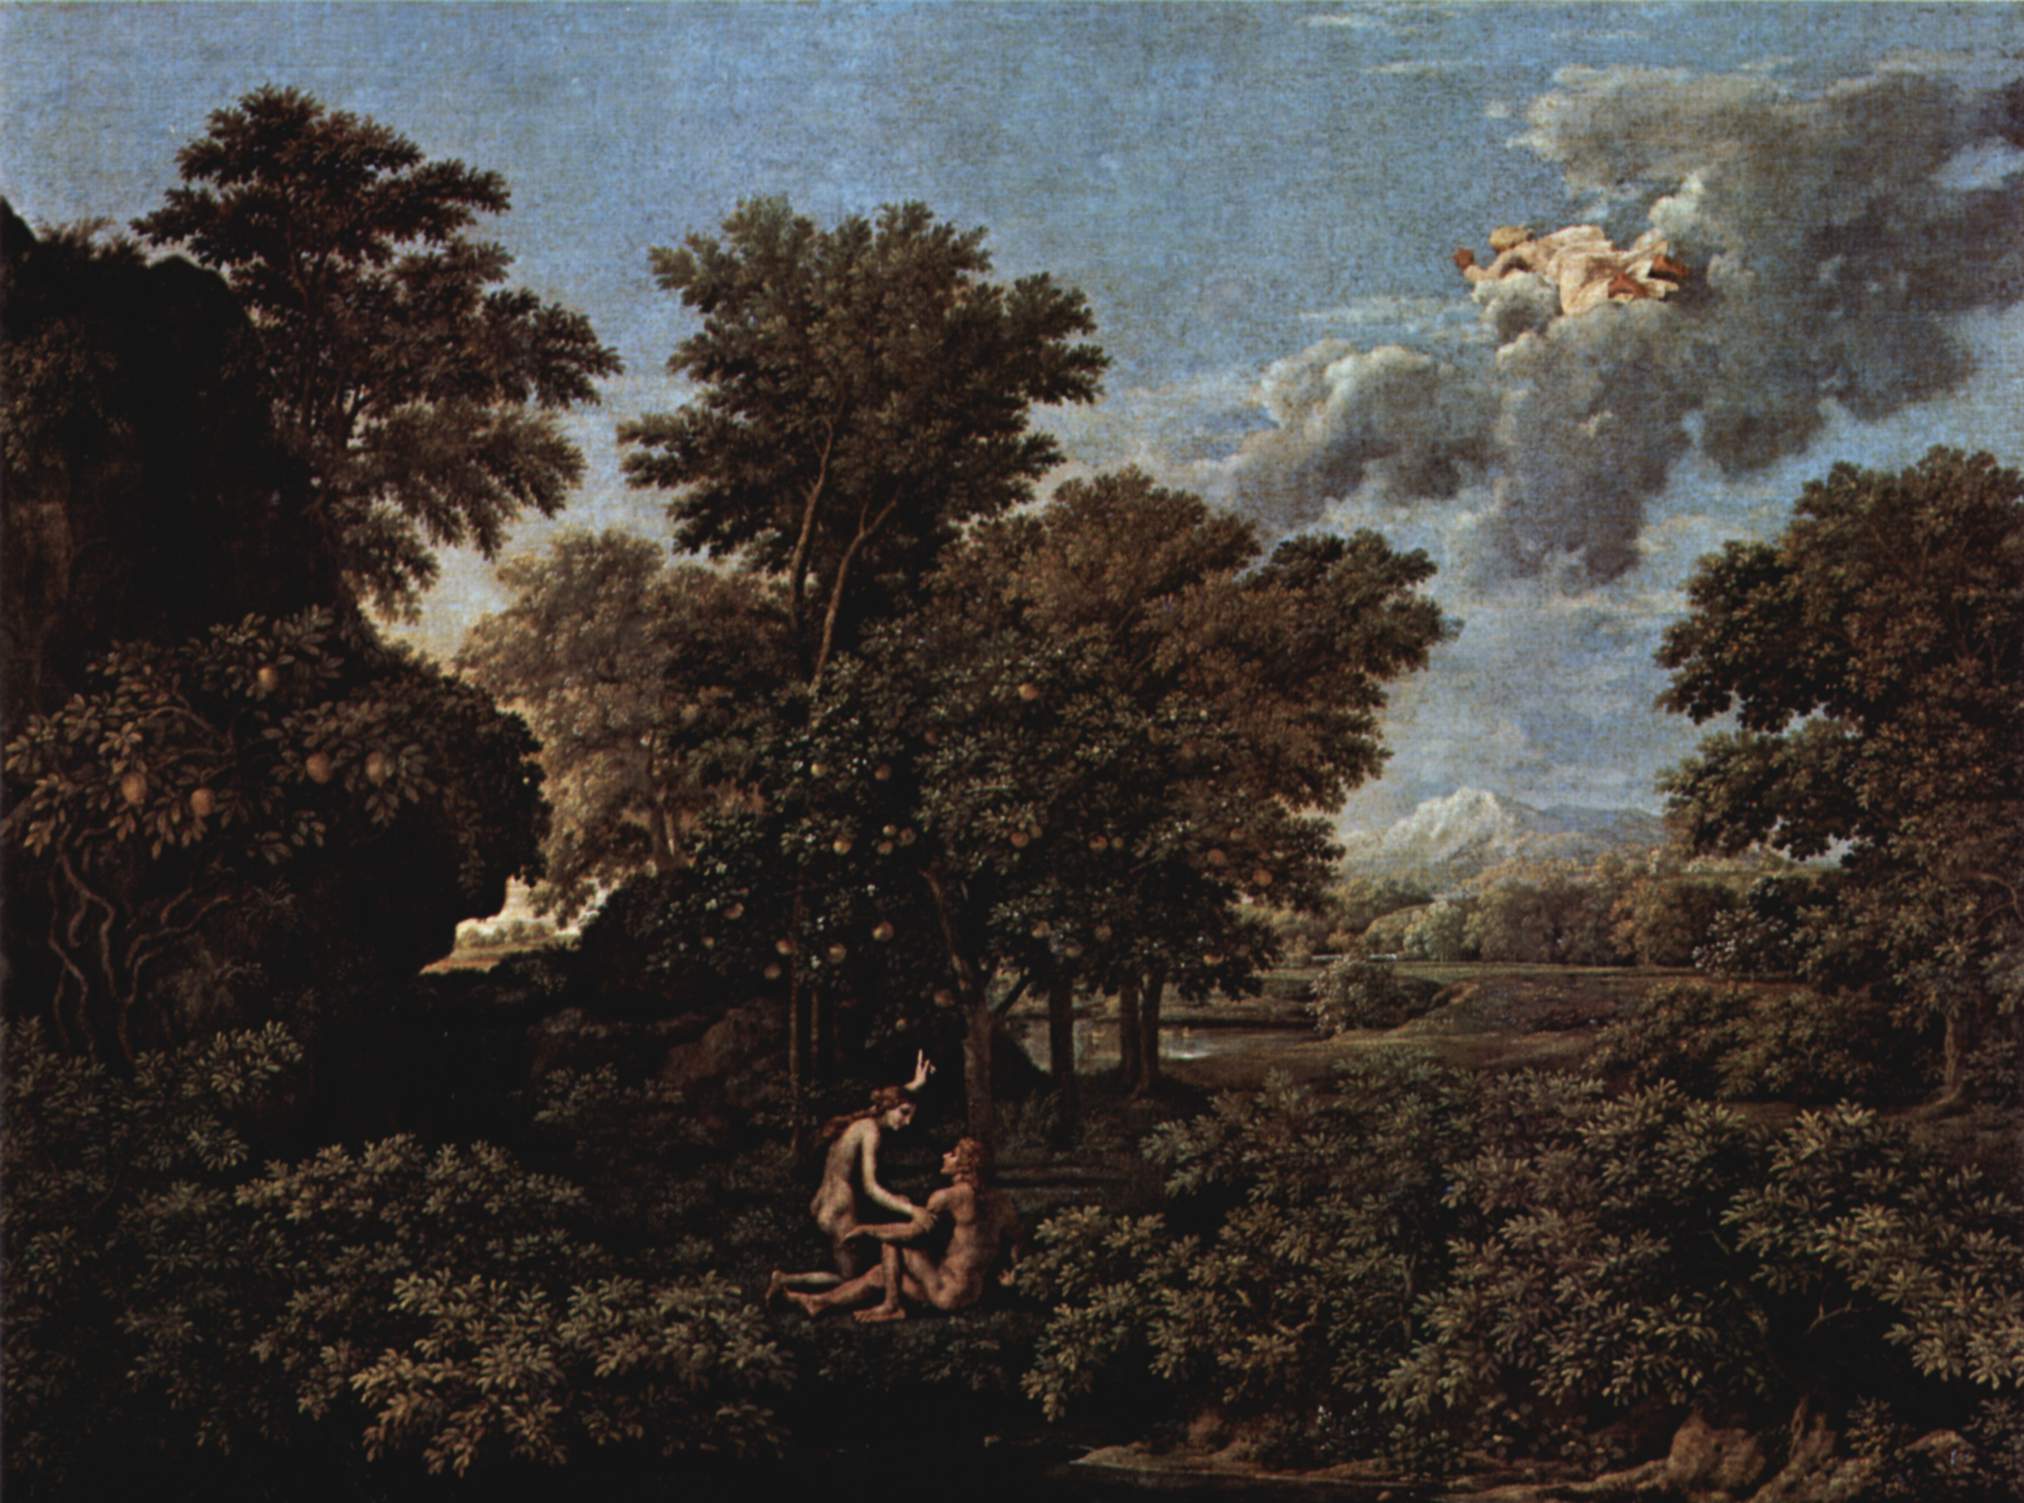 Весна (Земной рай) (Spring (The Earthly Paradise)) by Nicolas Poussin - 1664 - 117 x 160 см 